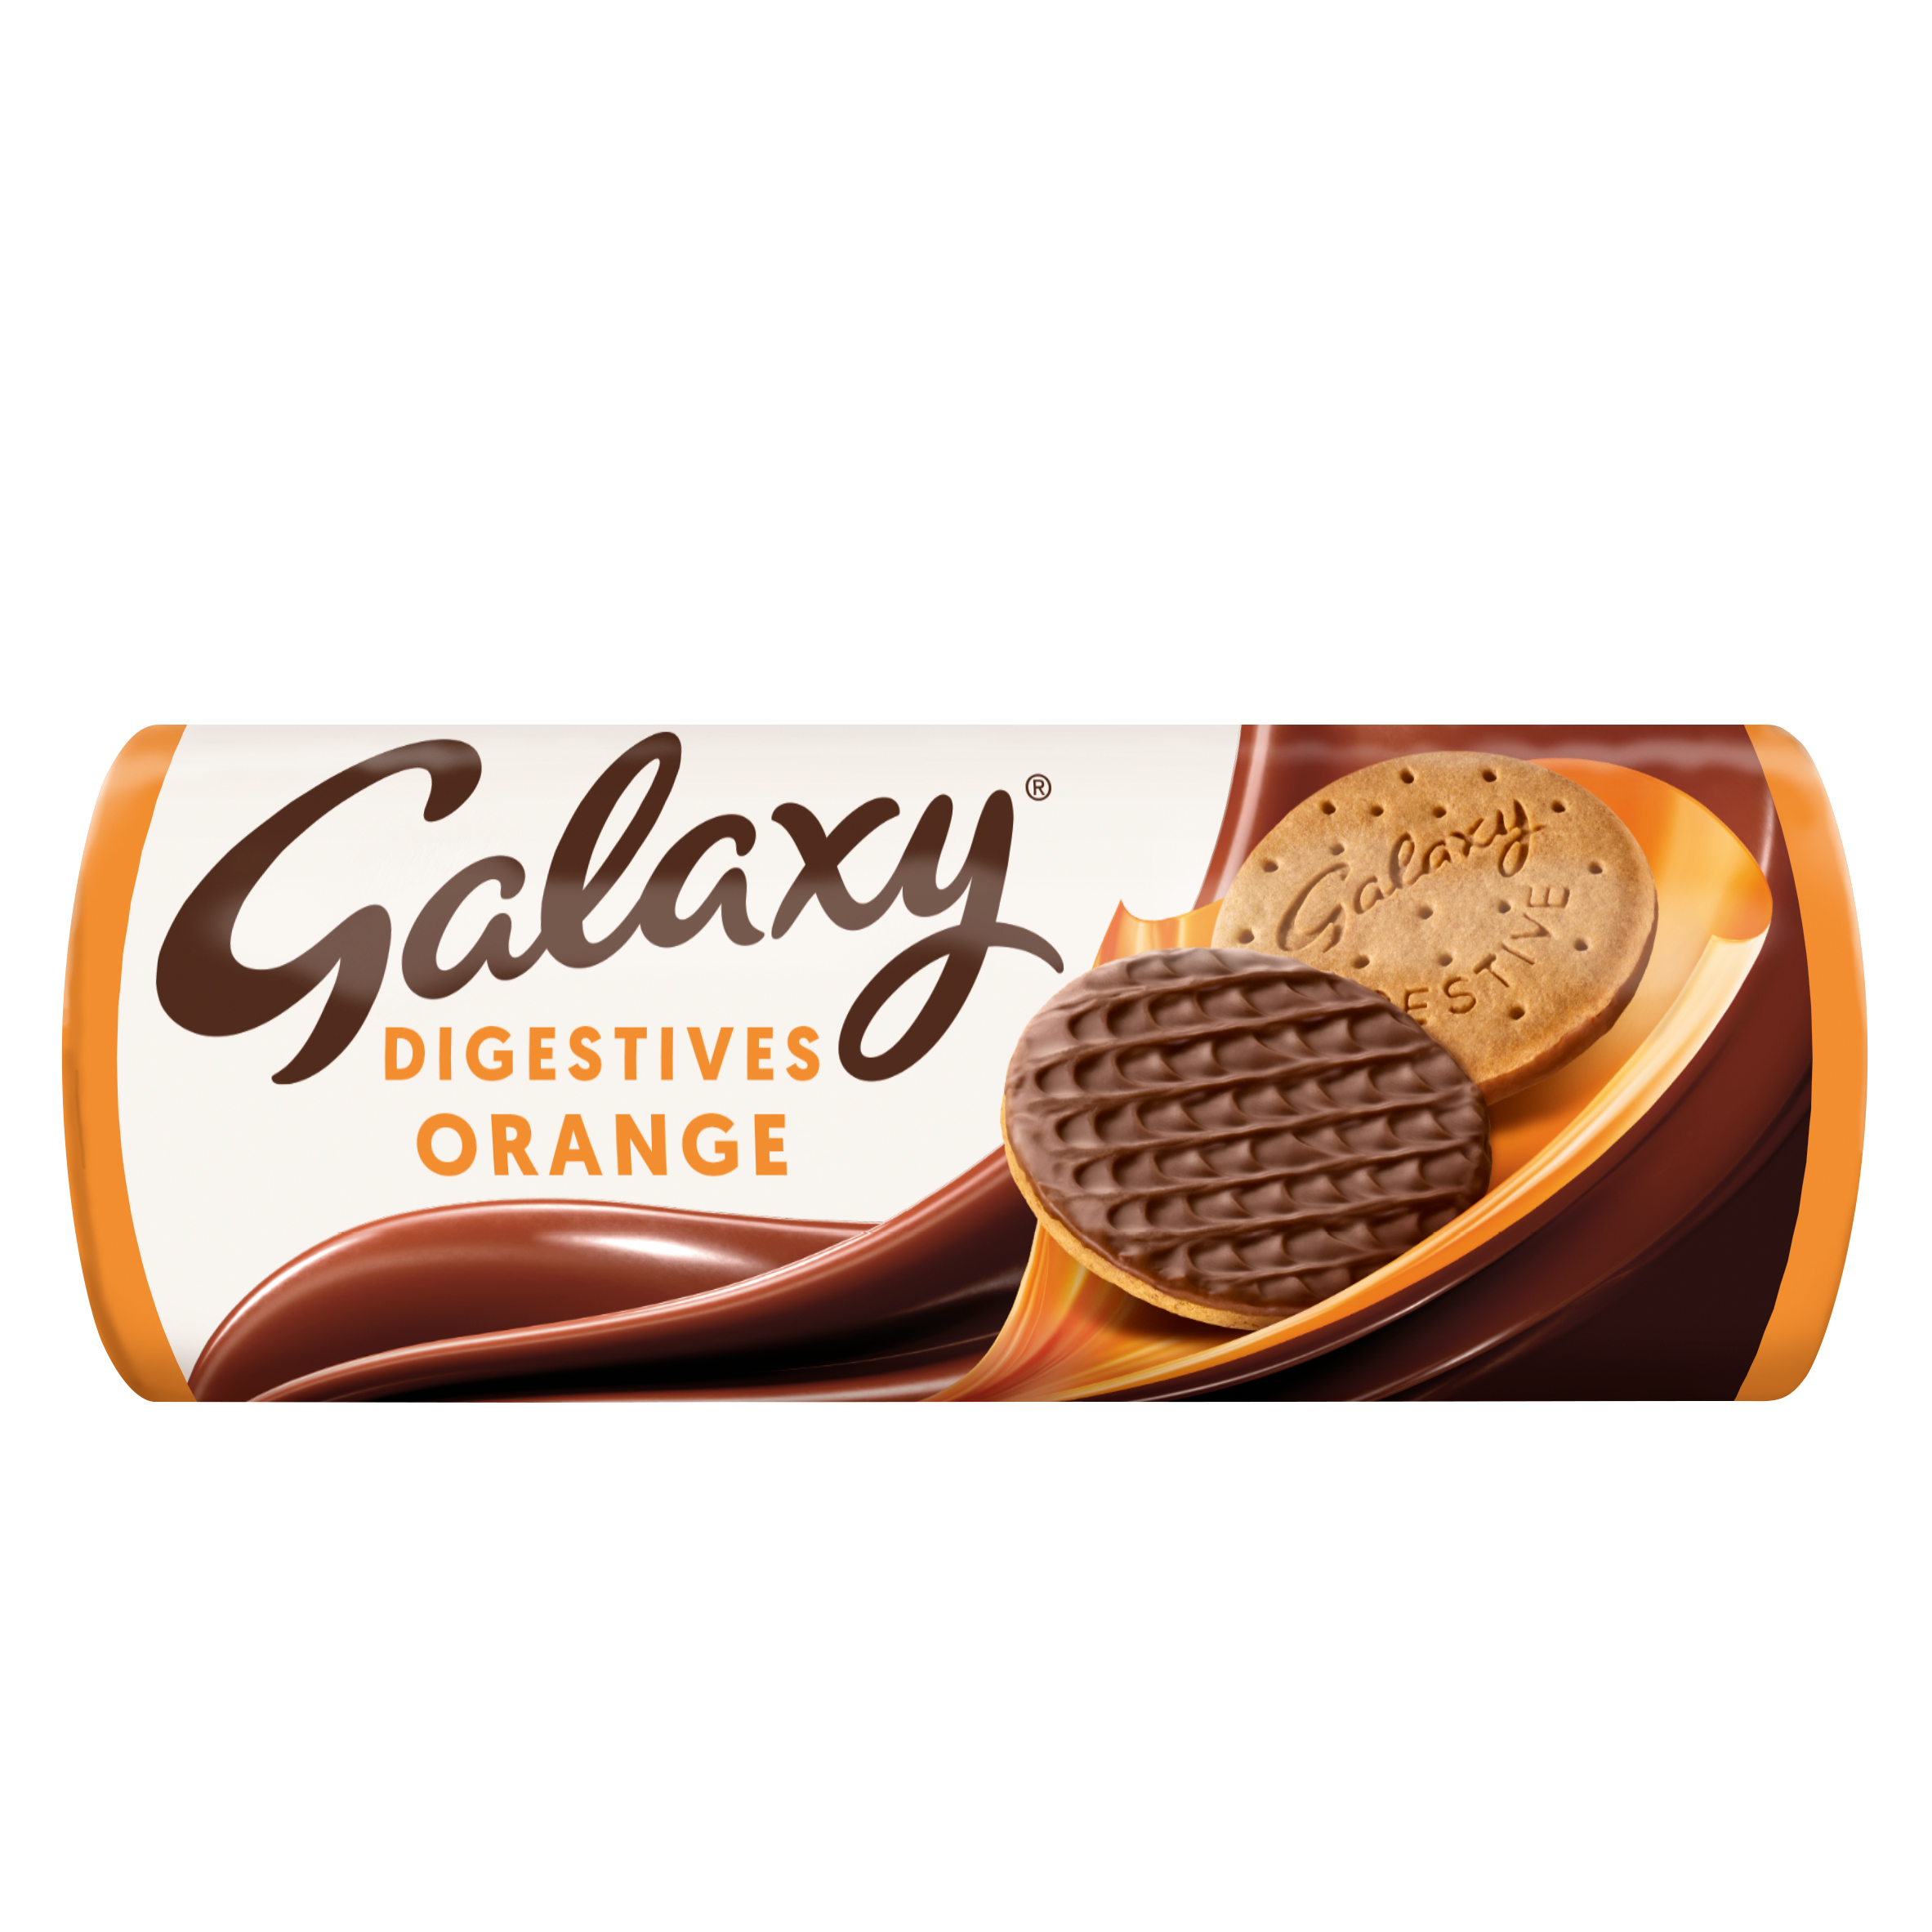 New Galaxy Milk Chocolate and Galaxy Orange digestive biscuits